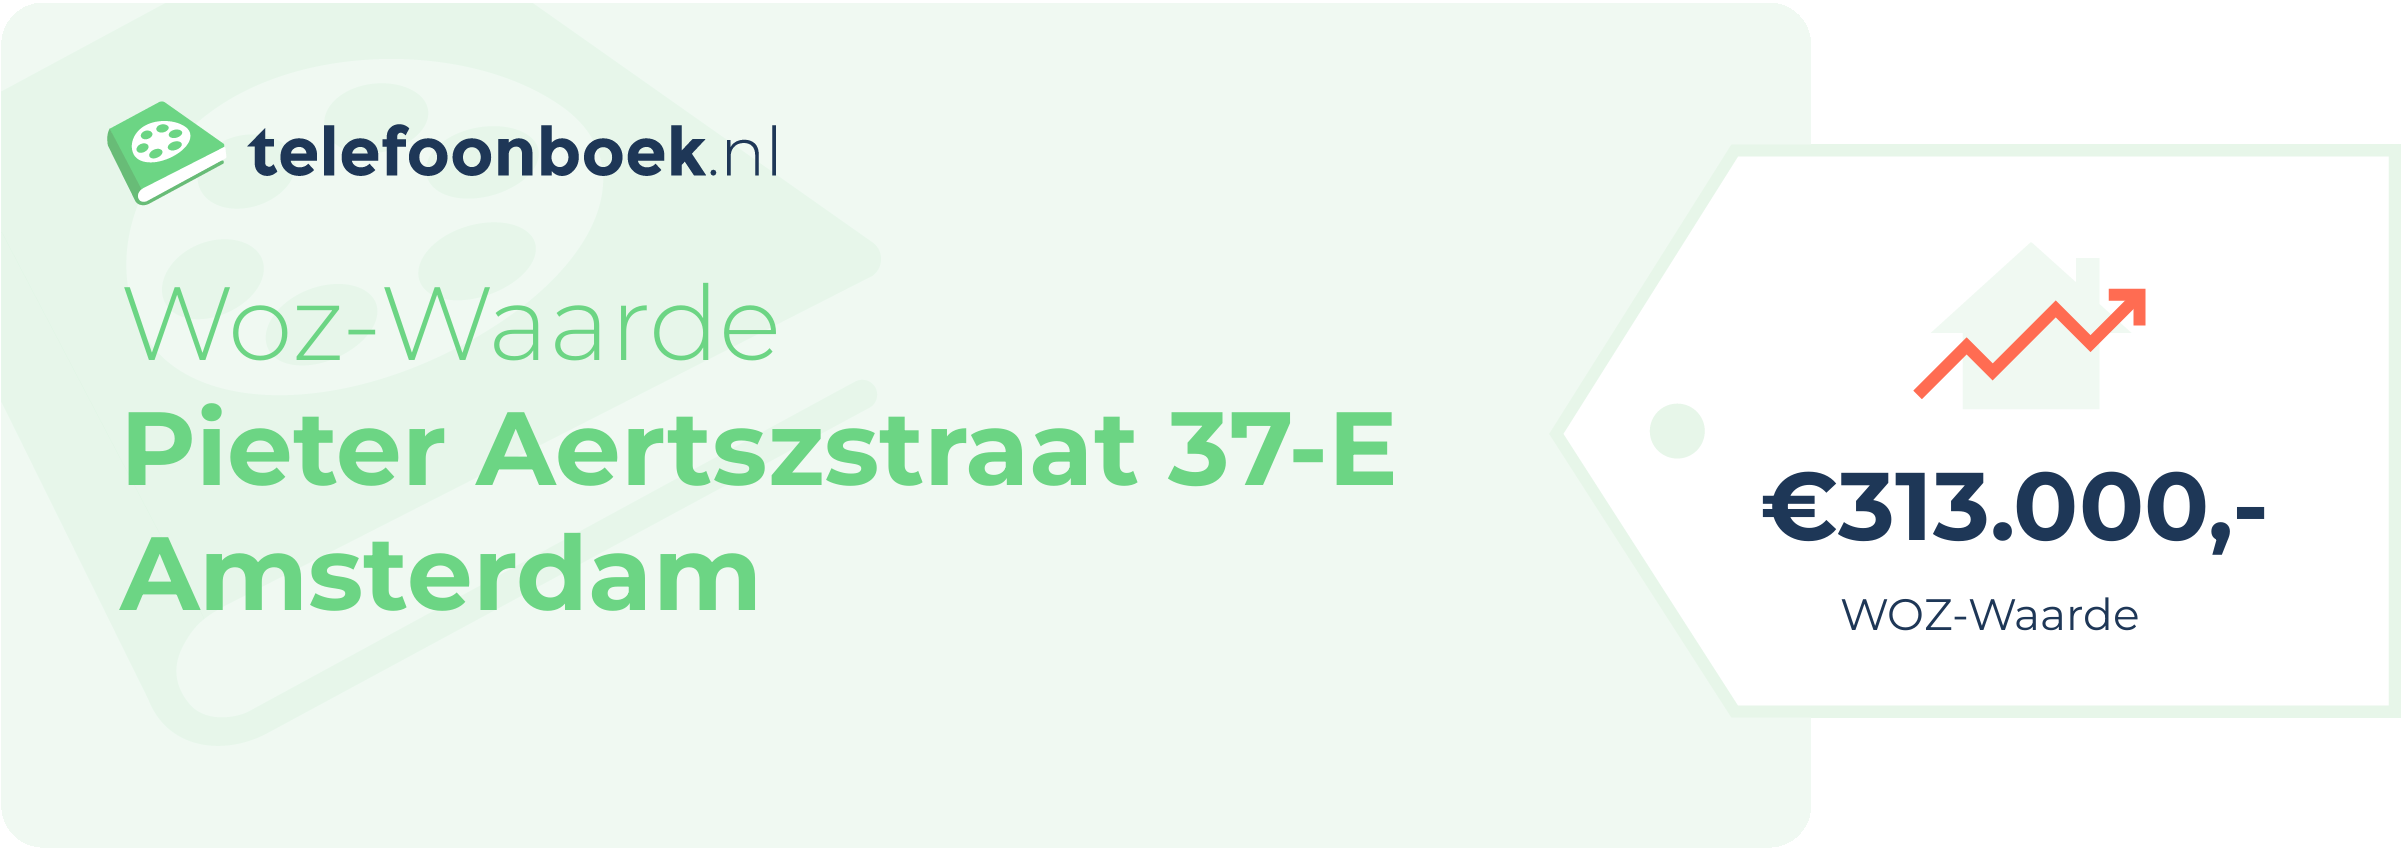 WOZ-waarde Pieter Aertszstraat 37-E Amsterdam